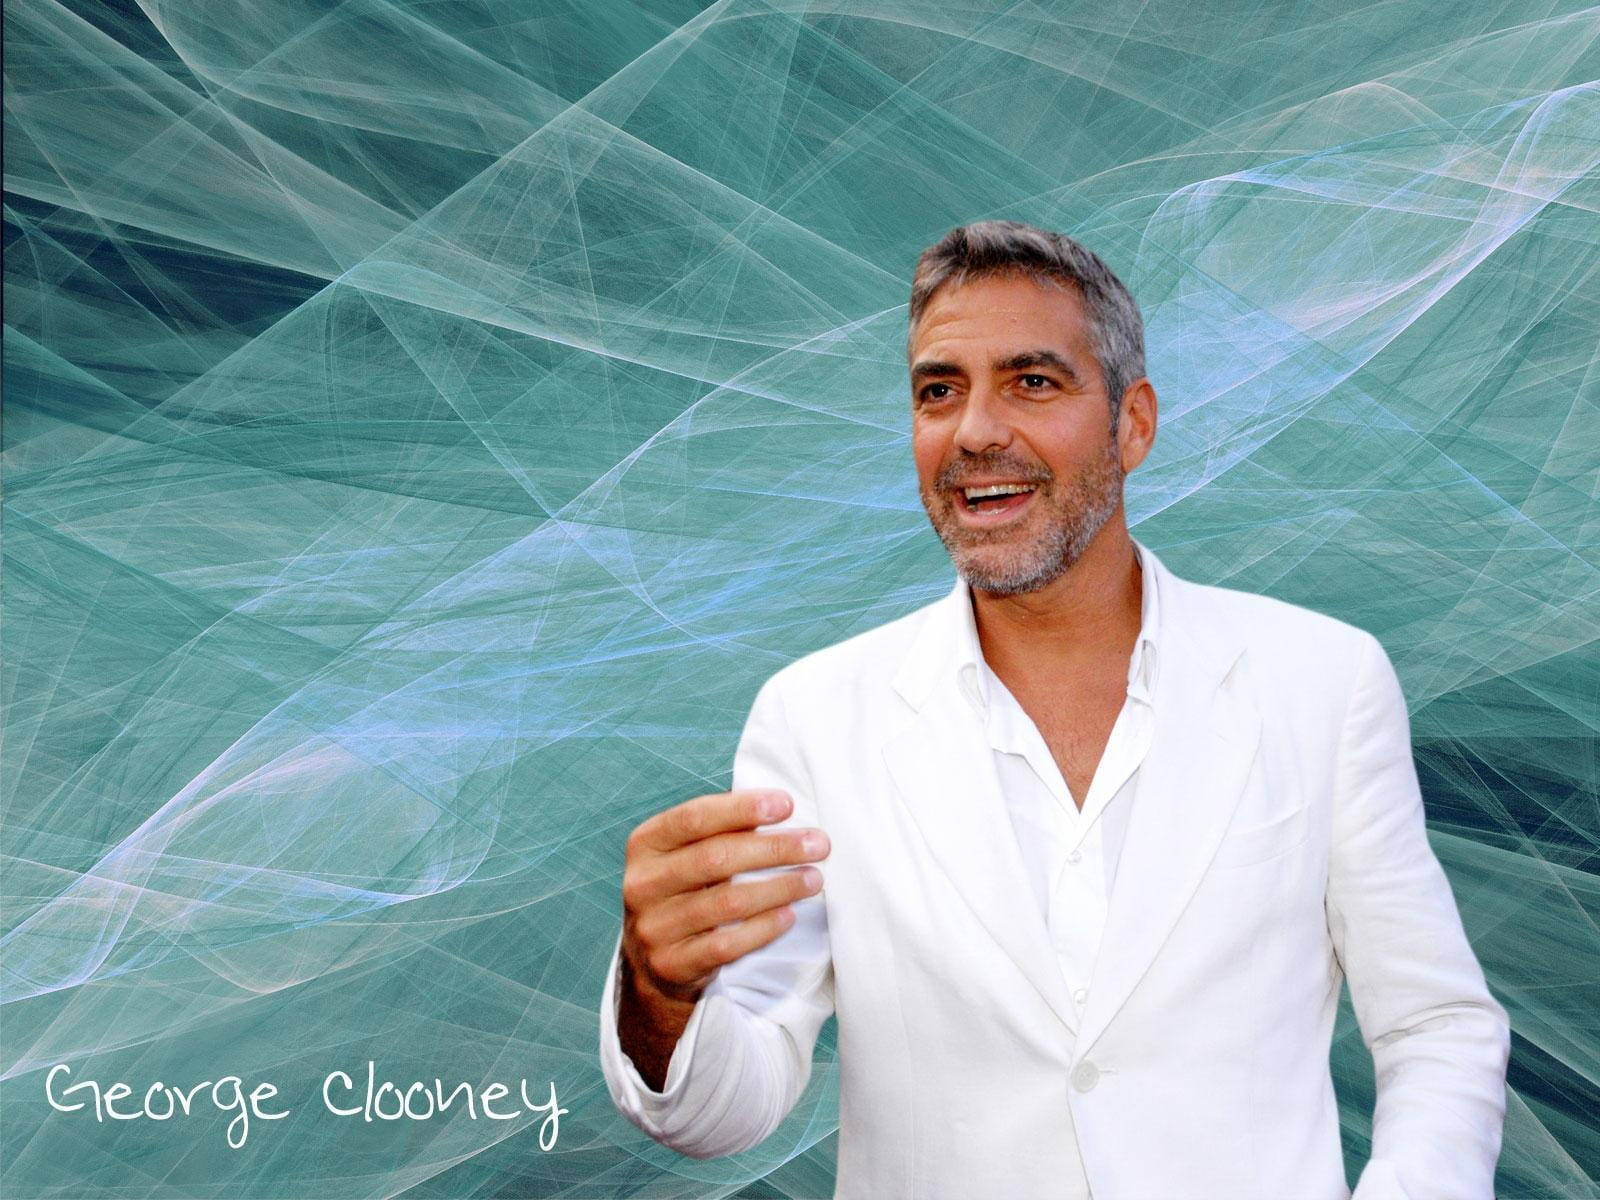 George Clooney Digital Art Wallpaper